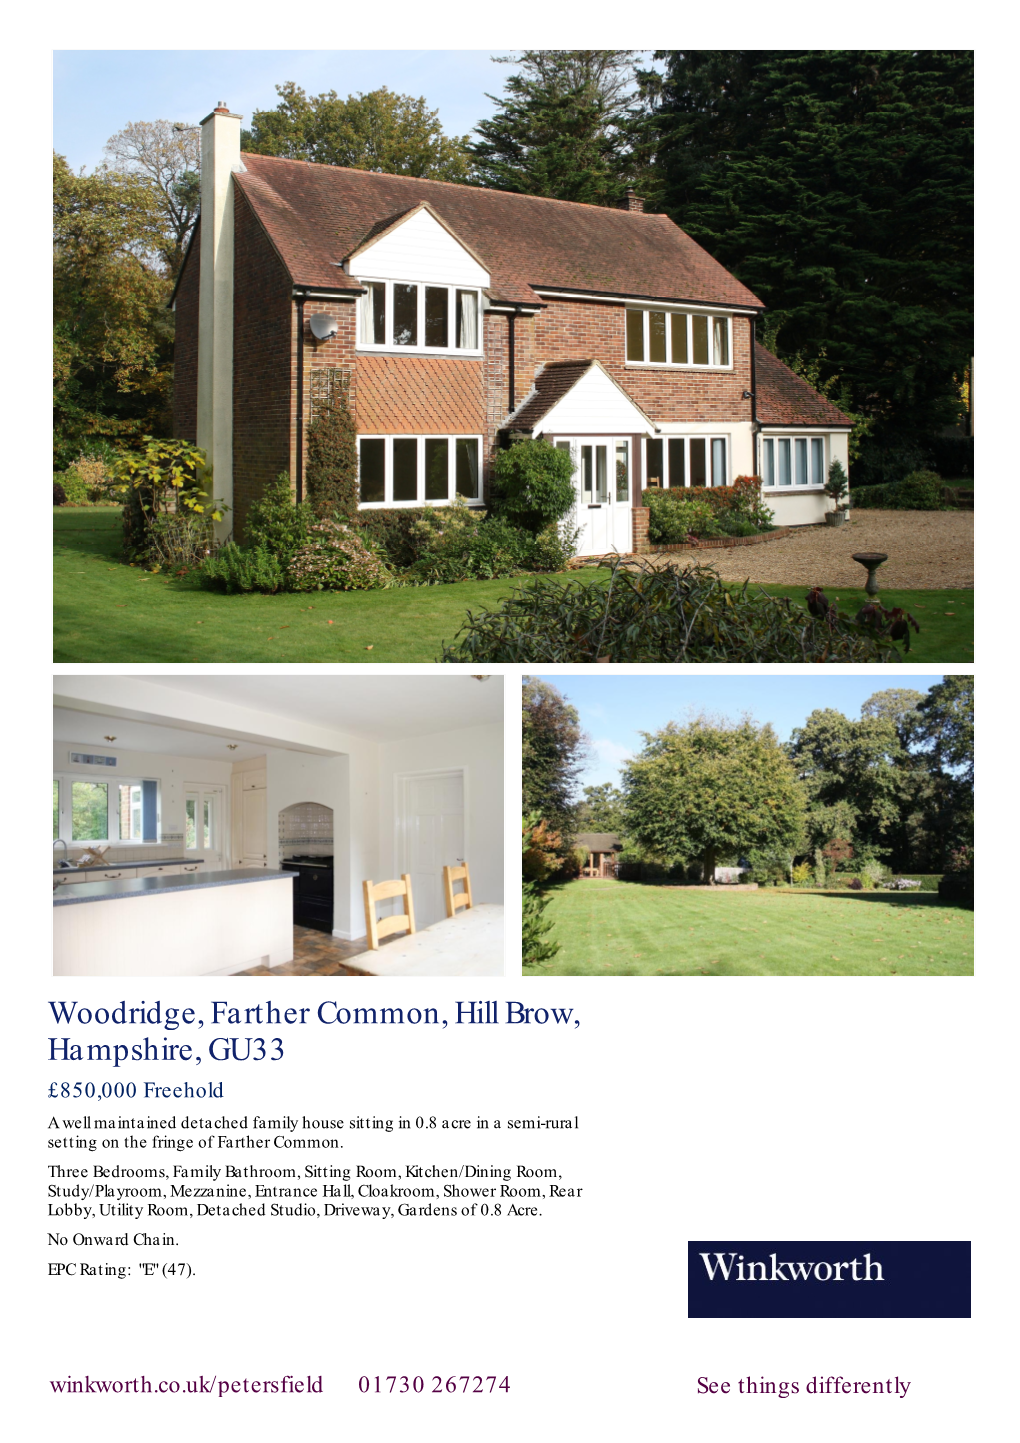 Woodridge, Farther Common, Hill Brow, Hampshire, GU33